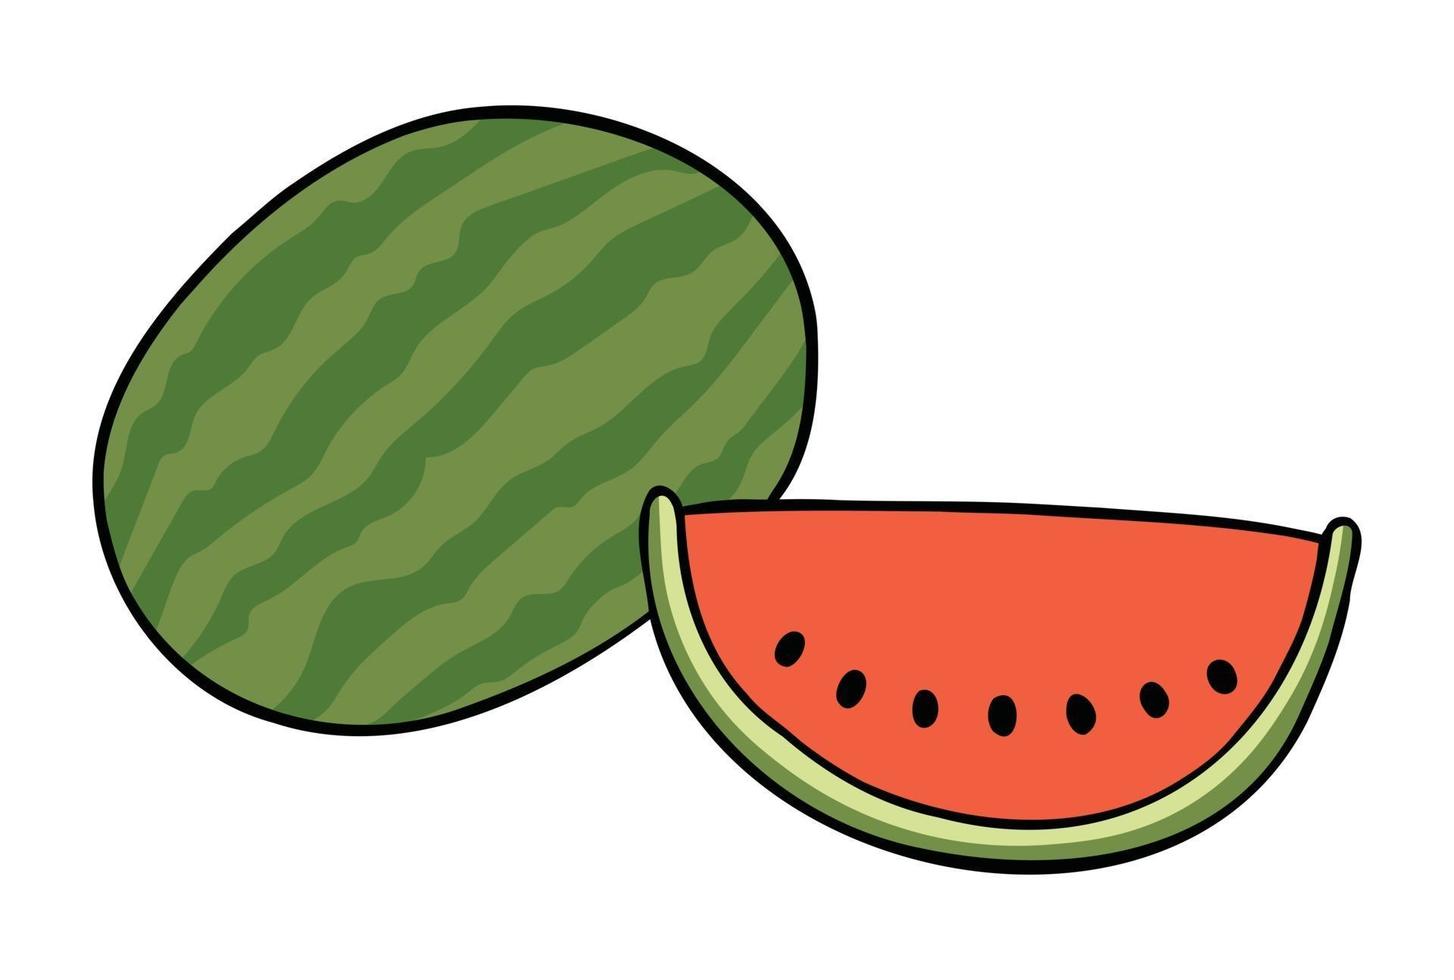 Cartoon Vector Illustration of Whole Watermelon and Watermelon Slice